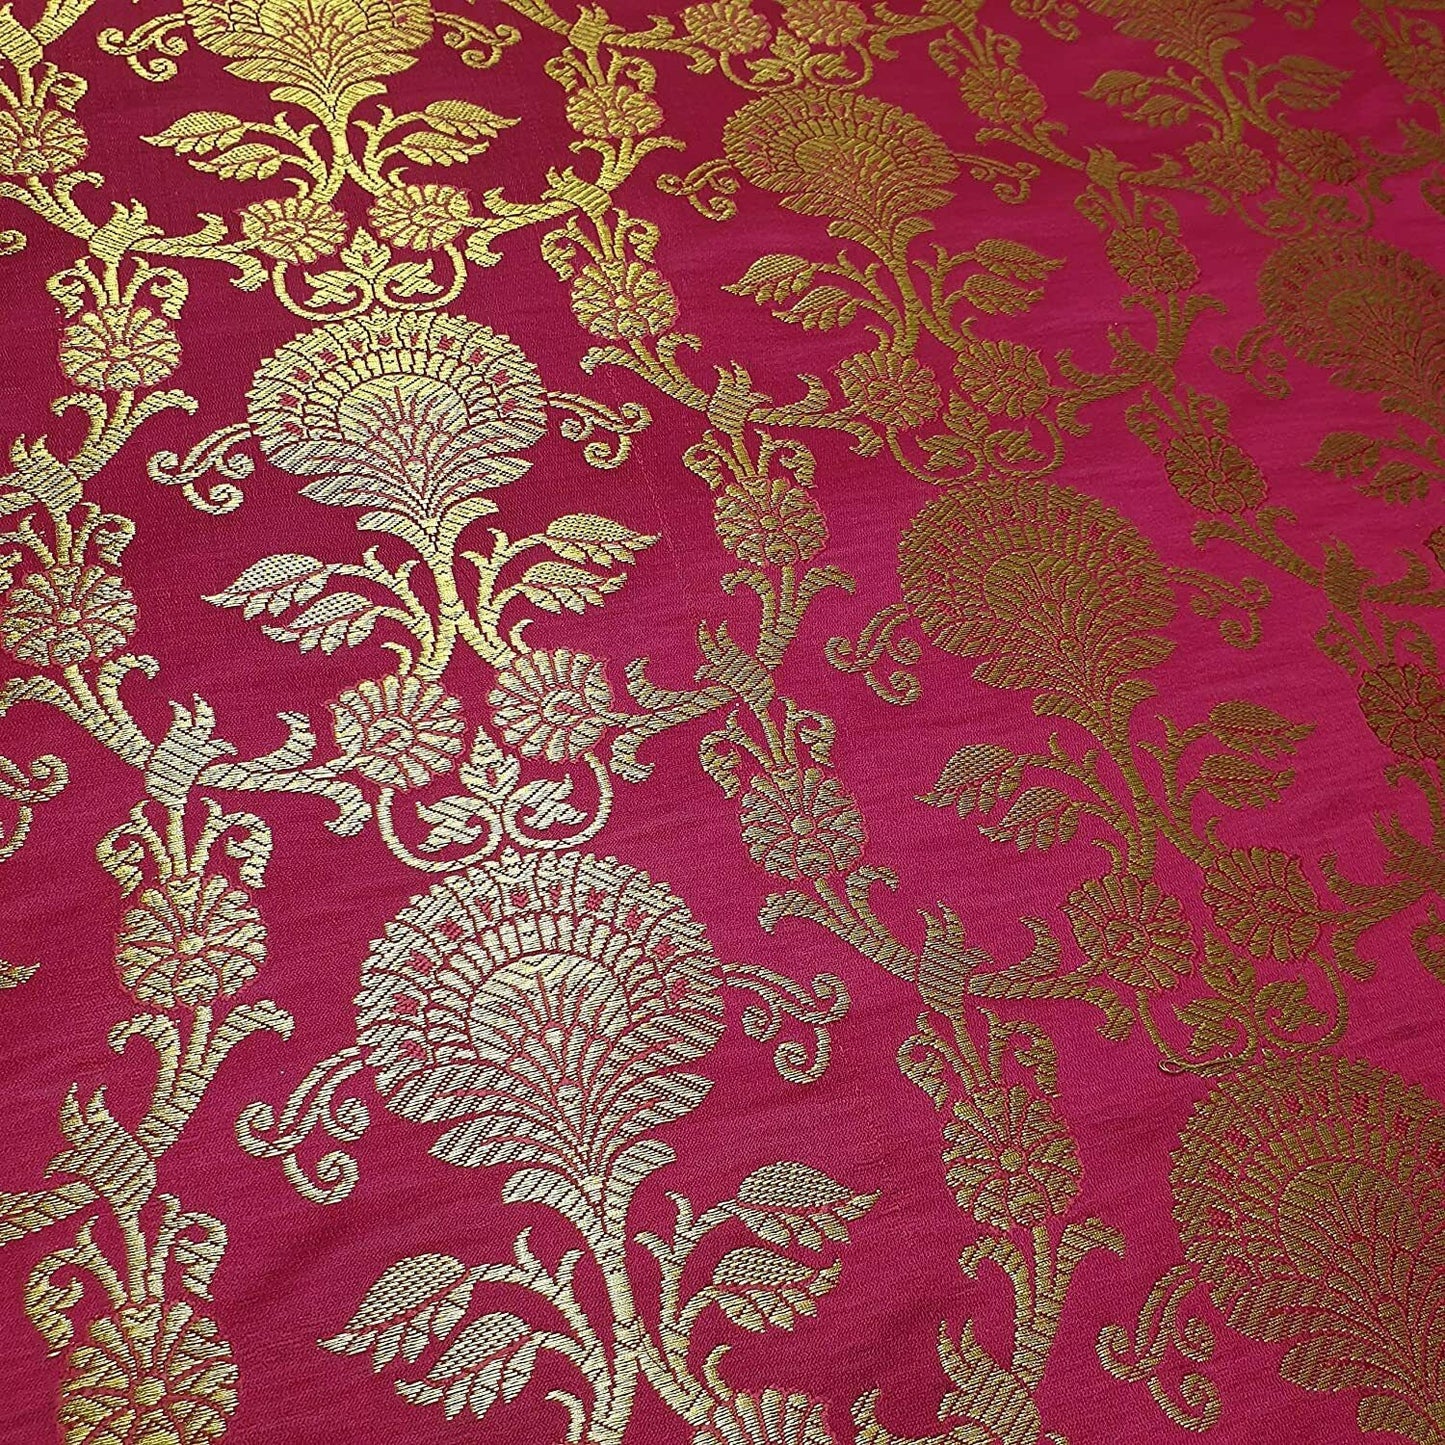 New Prints Ornamental Floral Gold Metallic Print Indian Banarasi Brocade Fabric (Magenta)